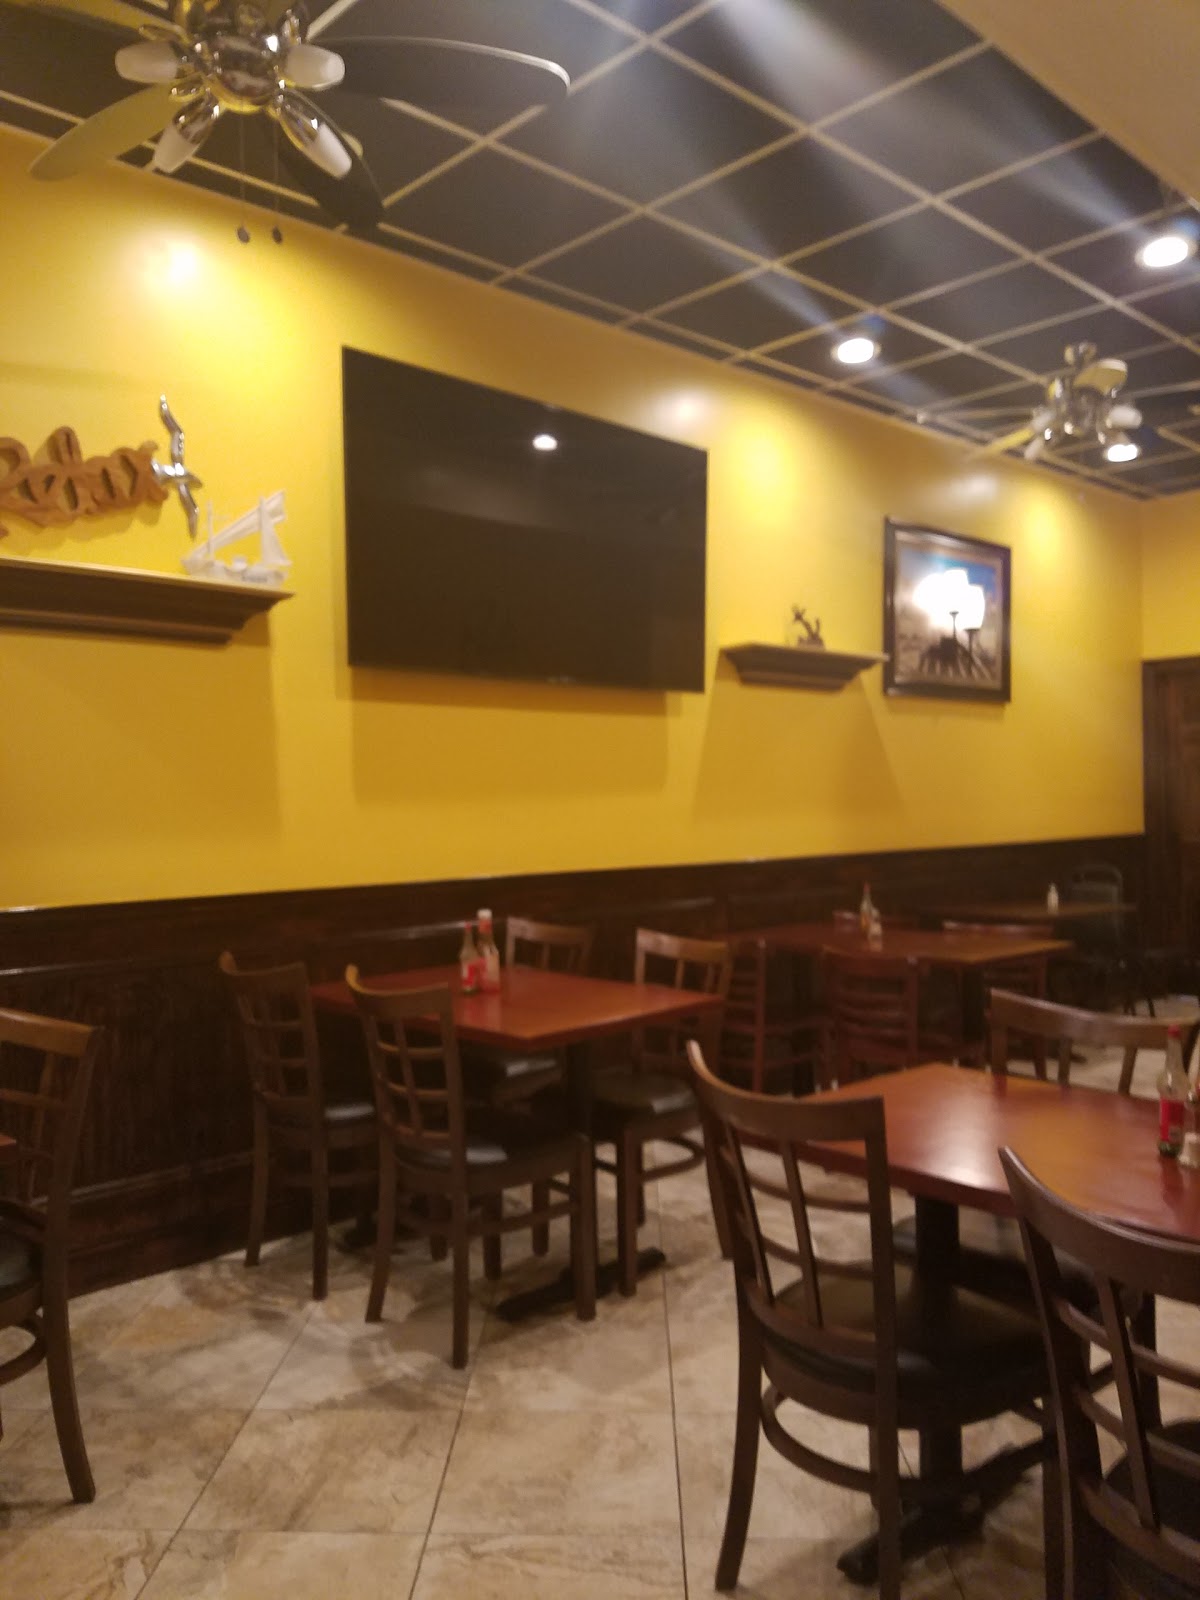 Photo of Restaurante San Martin 2 in North Bergen City, New Jersey, United States - 1 Picture of Restaurant, Food, Point of interest, Establishment